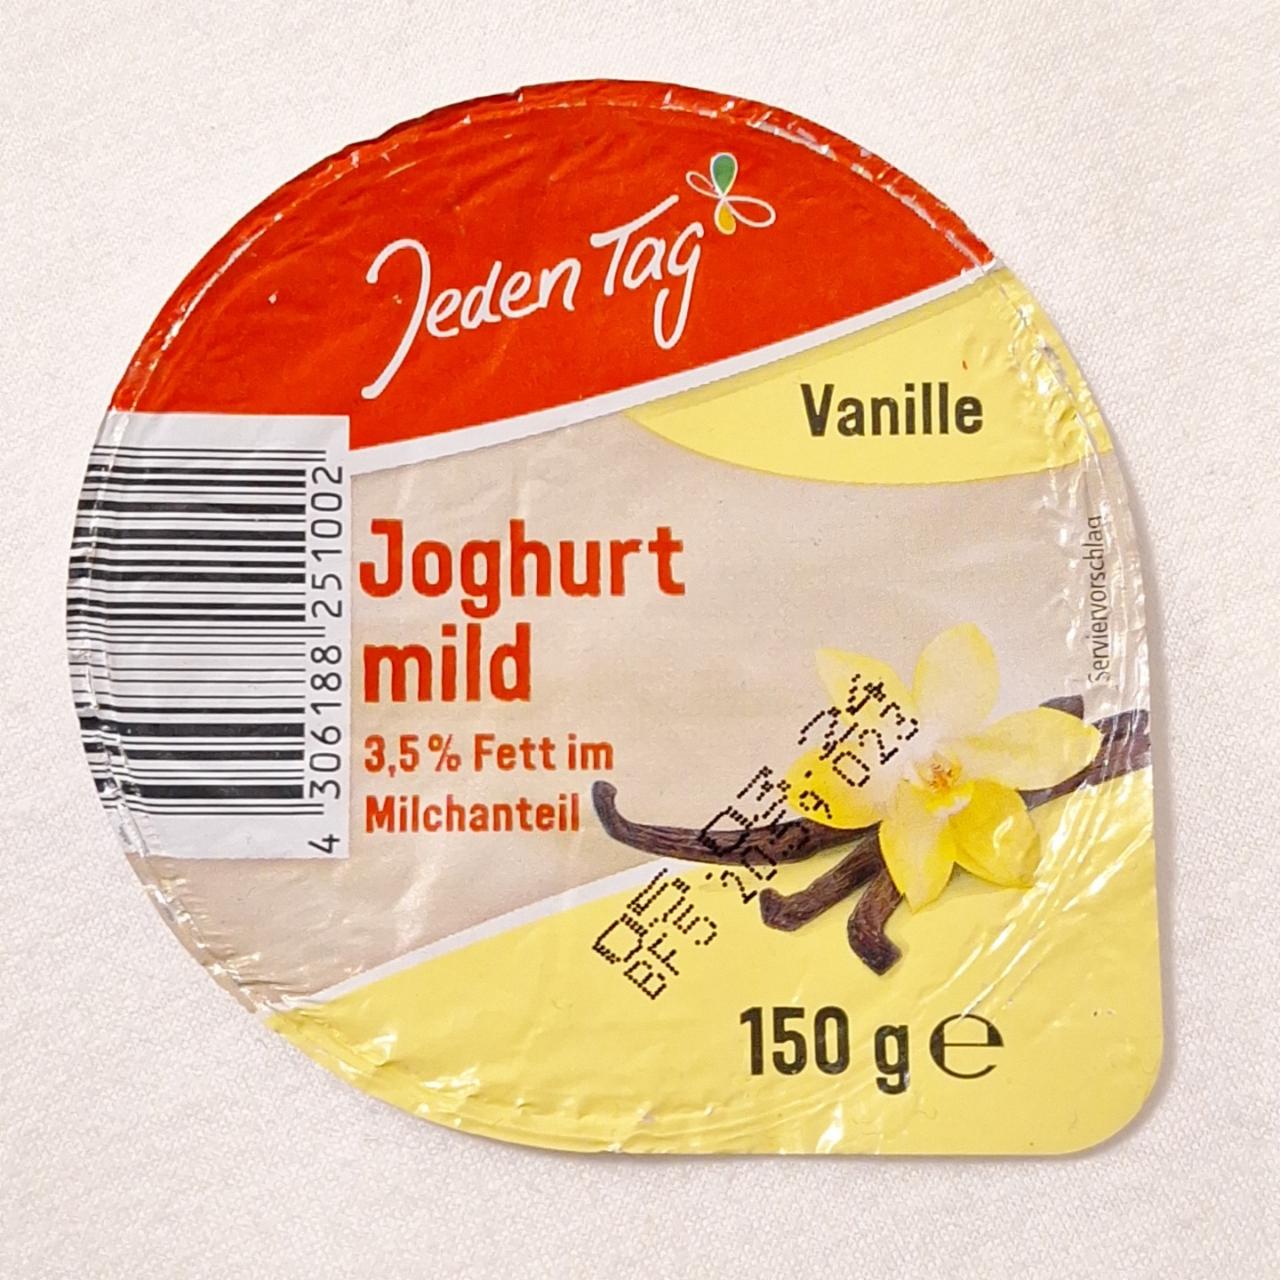 Fotografie - Joghurt mild 3,5% Fett Vanille Jeden Tag